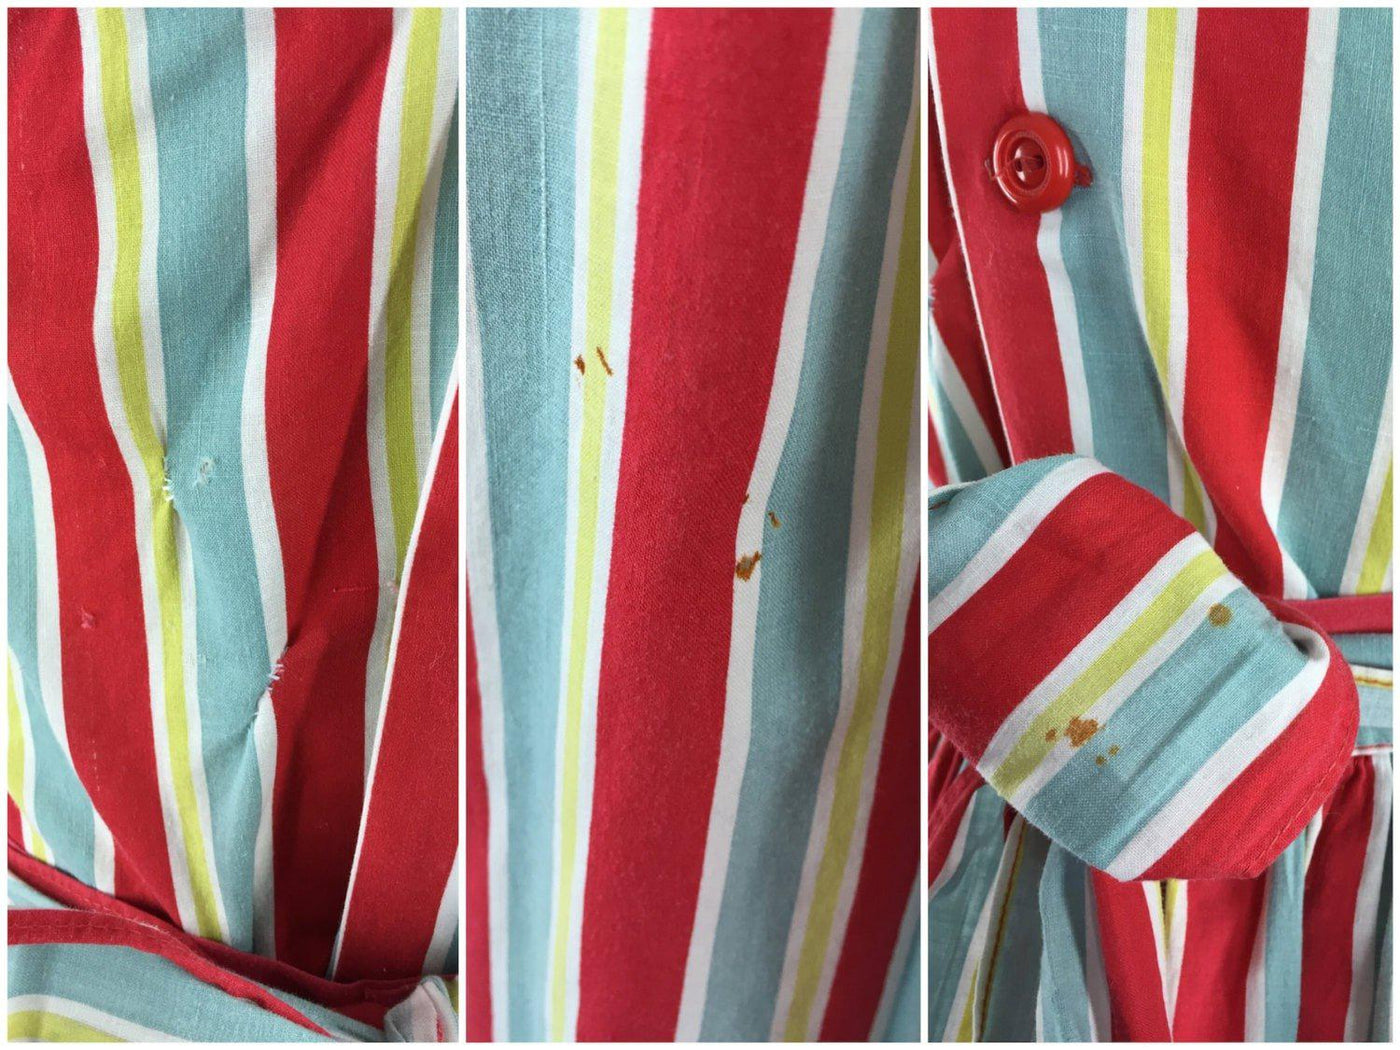 Vintage 1940s Red Striped Cotton Halter Dress - ThisBlueBird